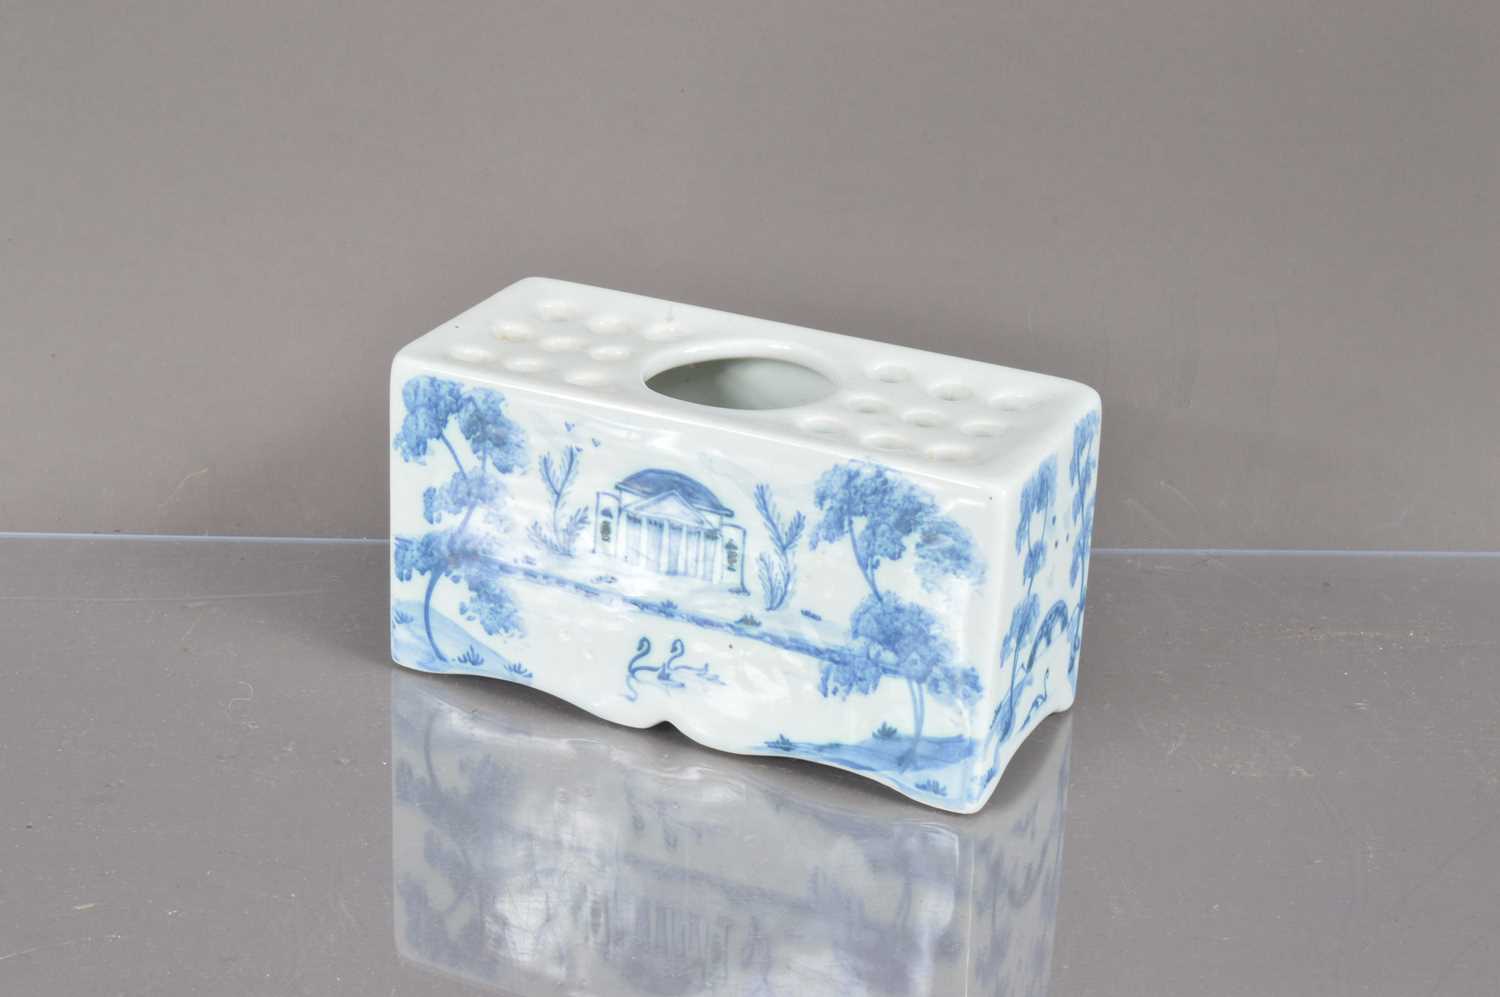 Deborah Sears 'Isis Ceramics' flower brick in 'English Garden' pattern,